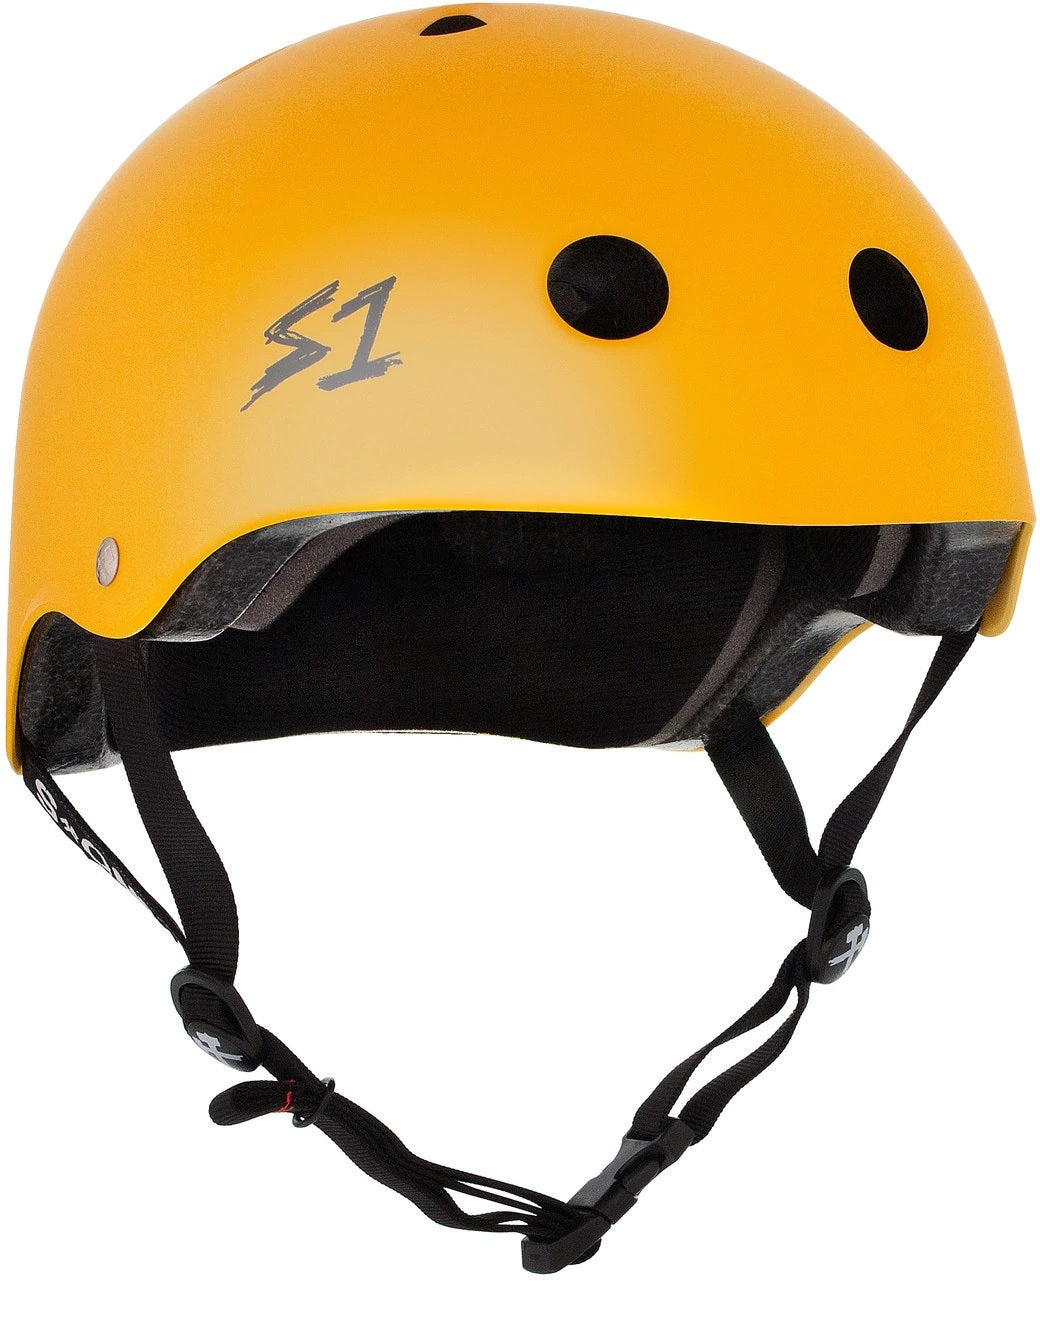 S1 Lifer Helmet in Yellow Matt